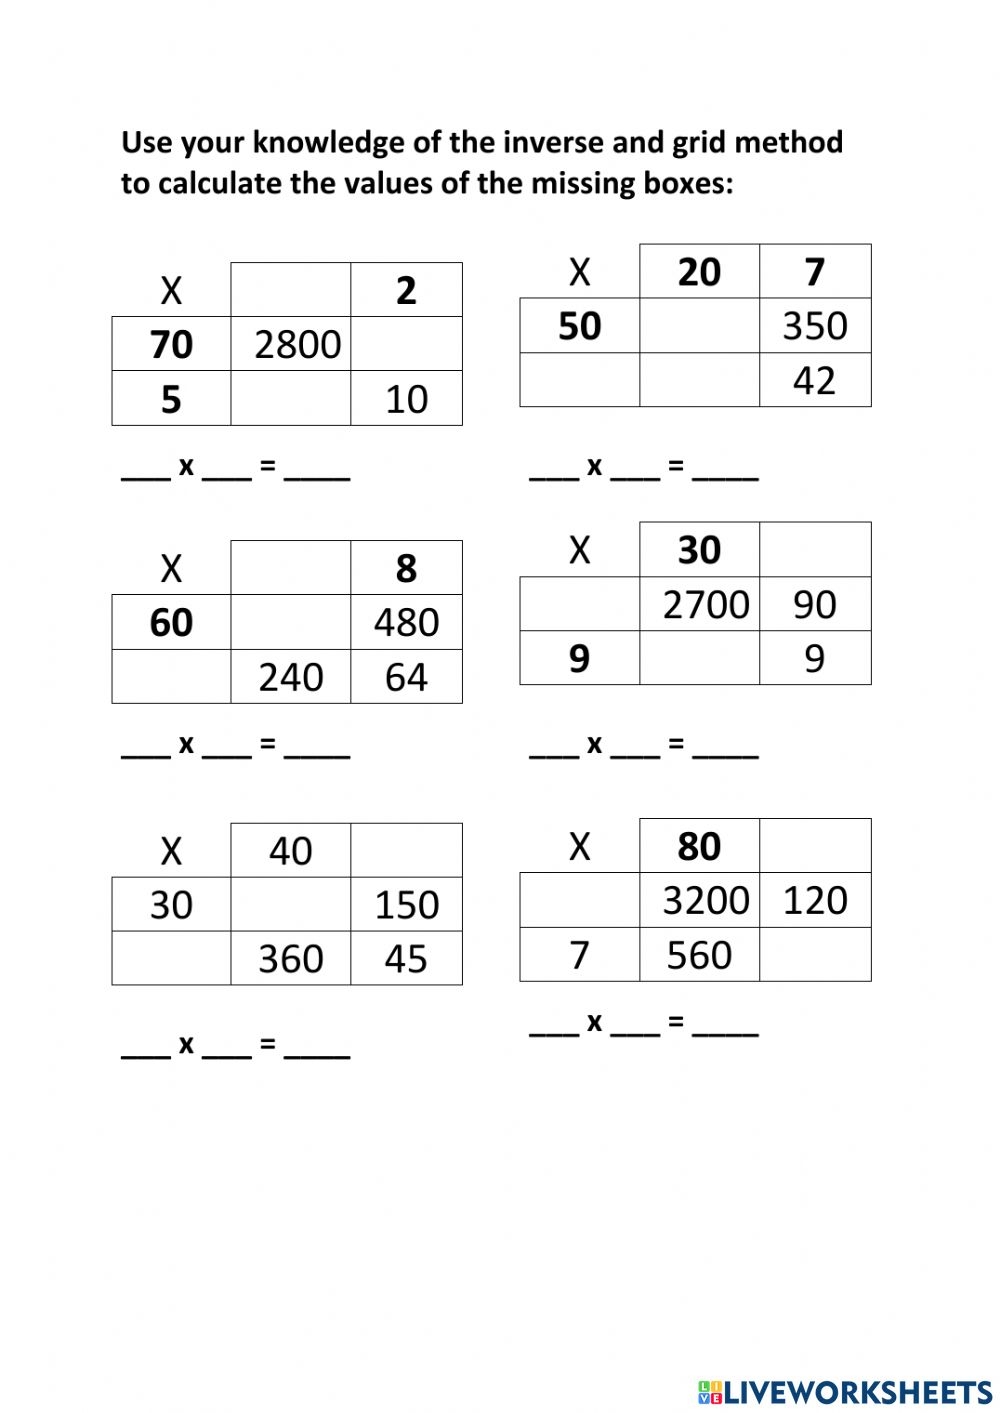 Multiplication Using Grid Method Worksheets